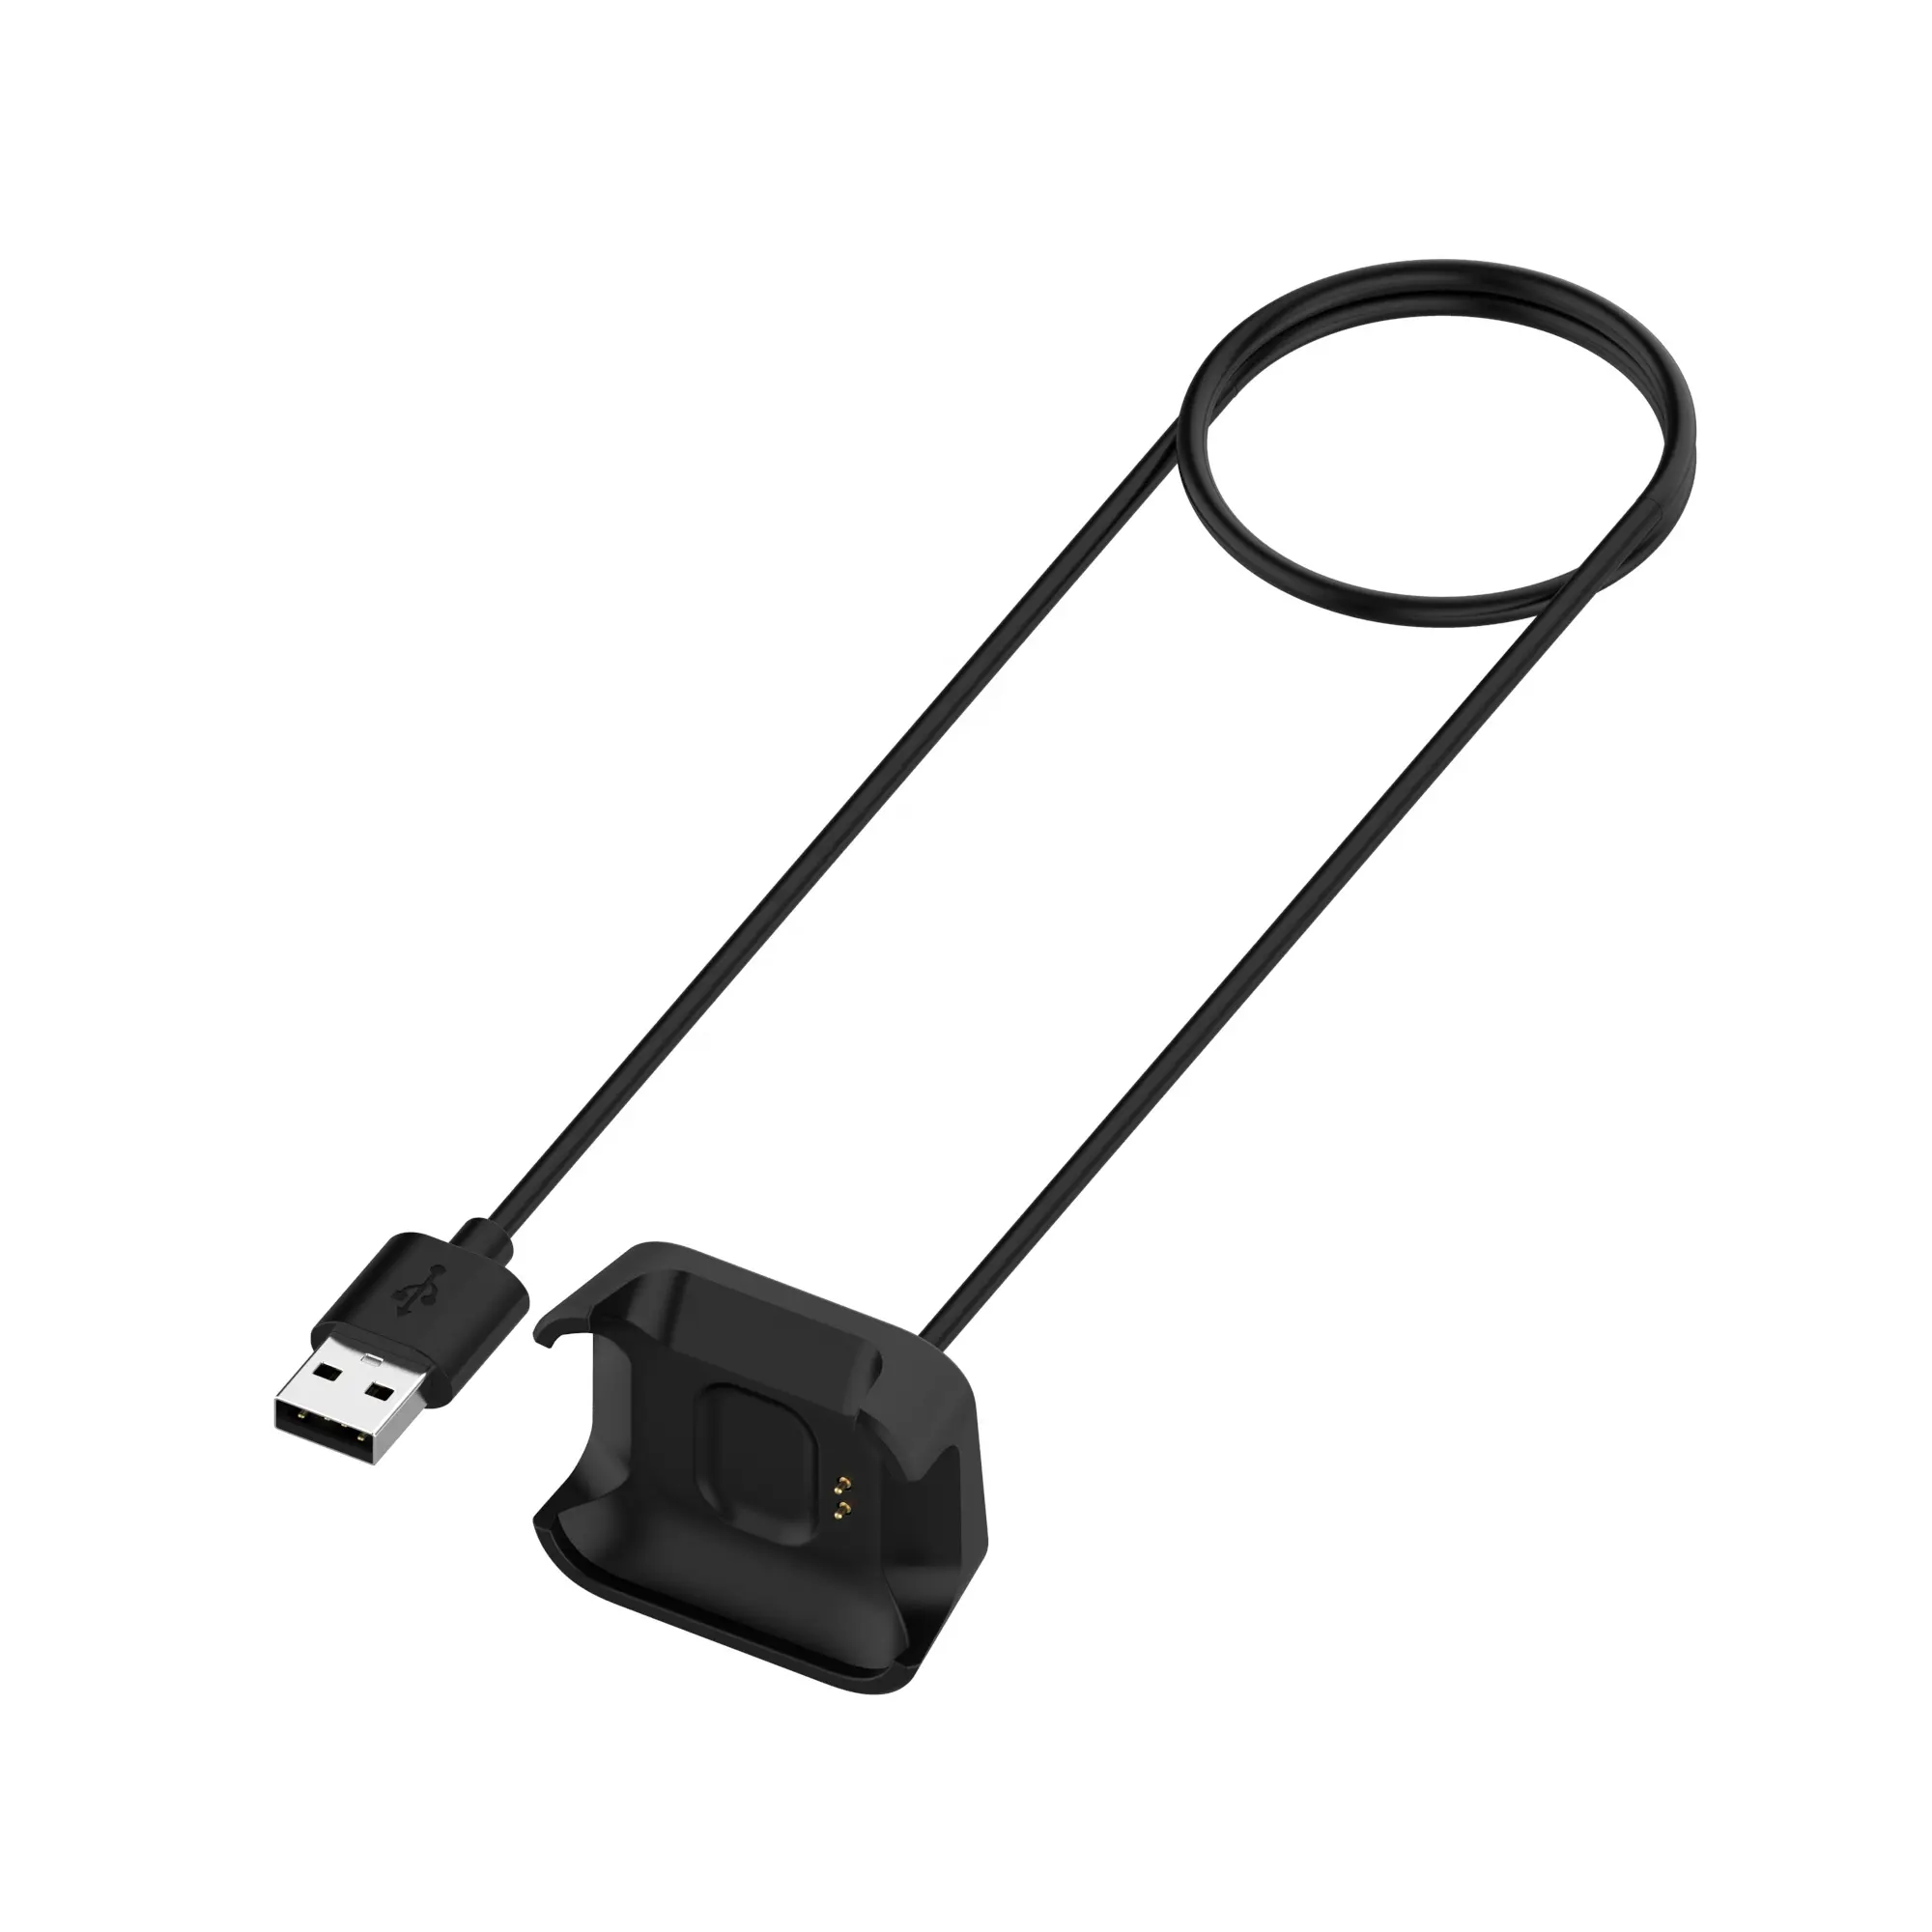 Mıknatıs USB şarj aleti kablo kordonu şarj hattı-Xiaomi Mi izle Lite Redmi İzle Dropshipping